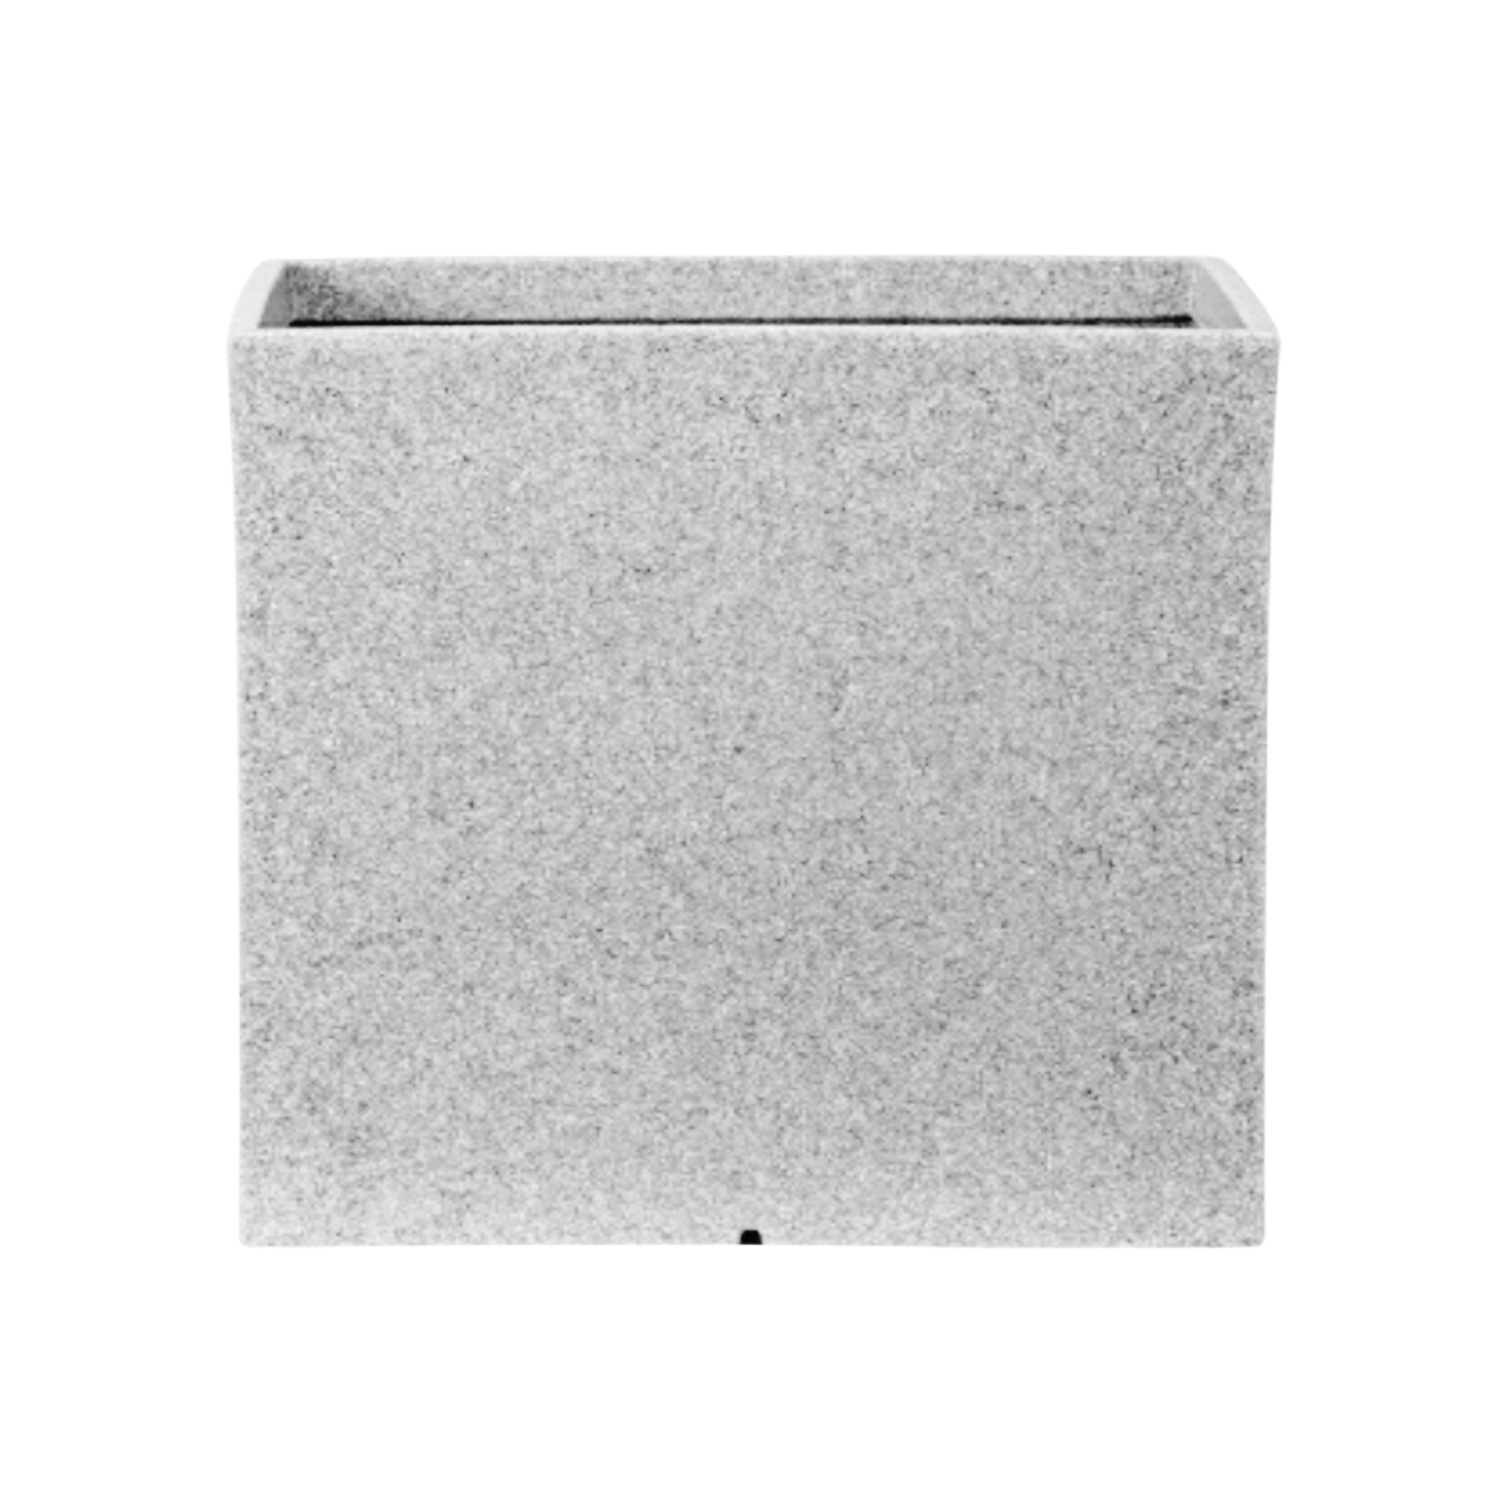 Quebec Square Rotomolded Plastic Pot for Home & Garden (White Stone Finish, Pack of 1)